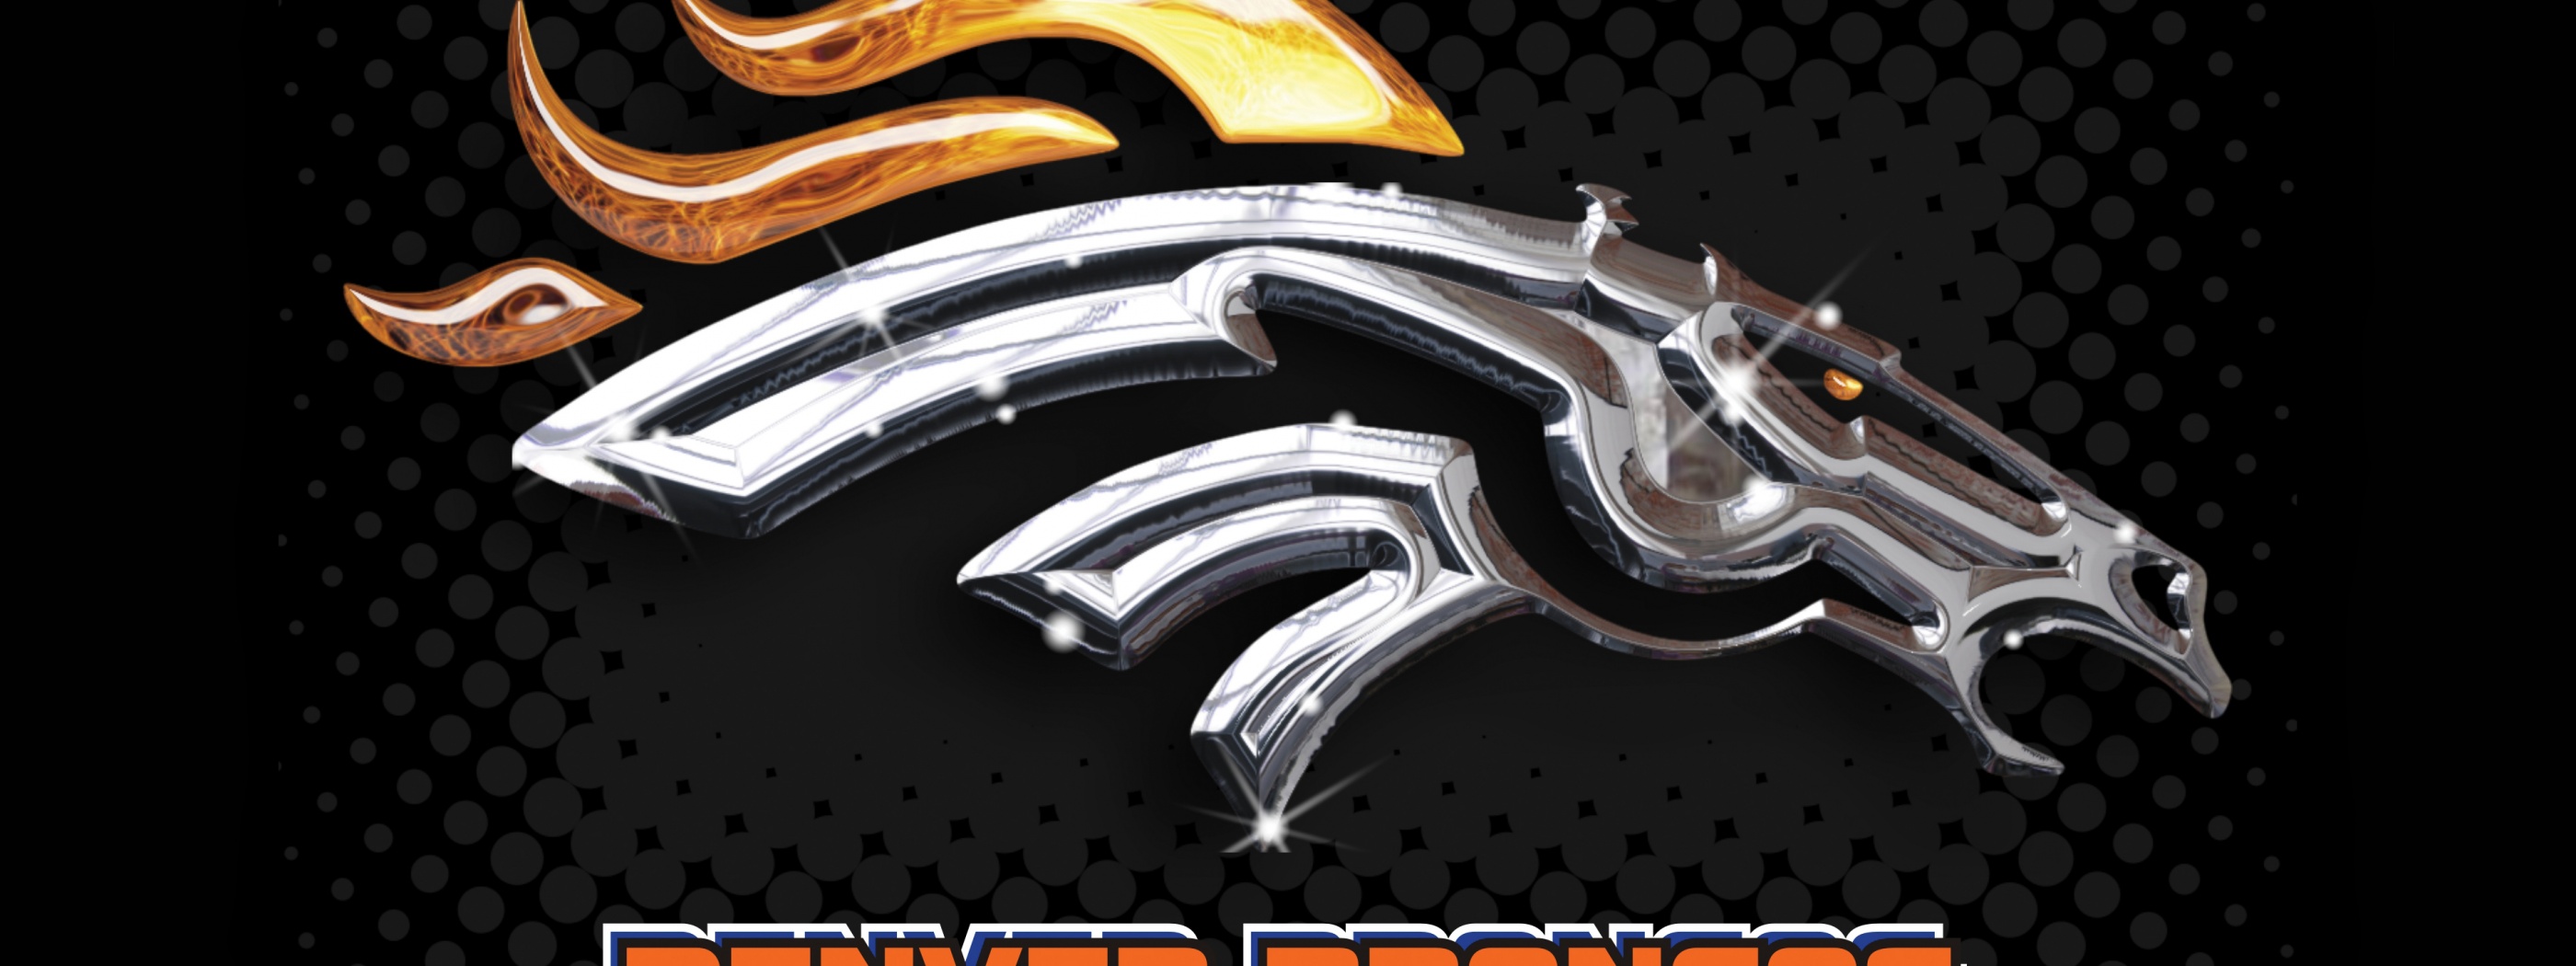 NFL Denver Broncos 3D Logo